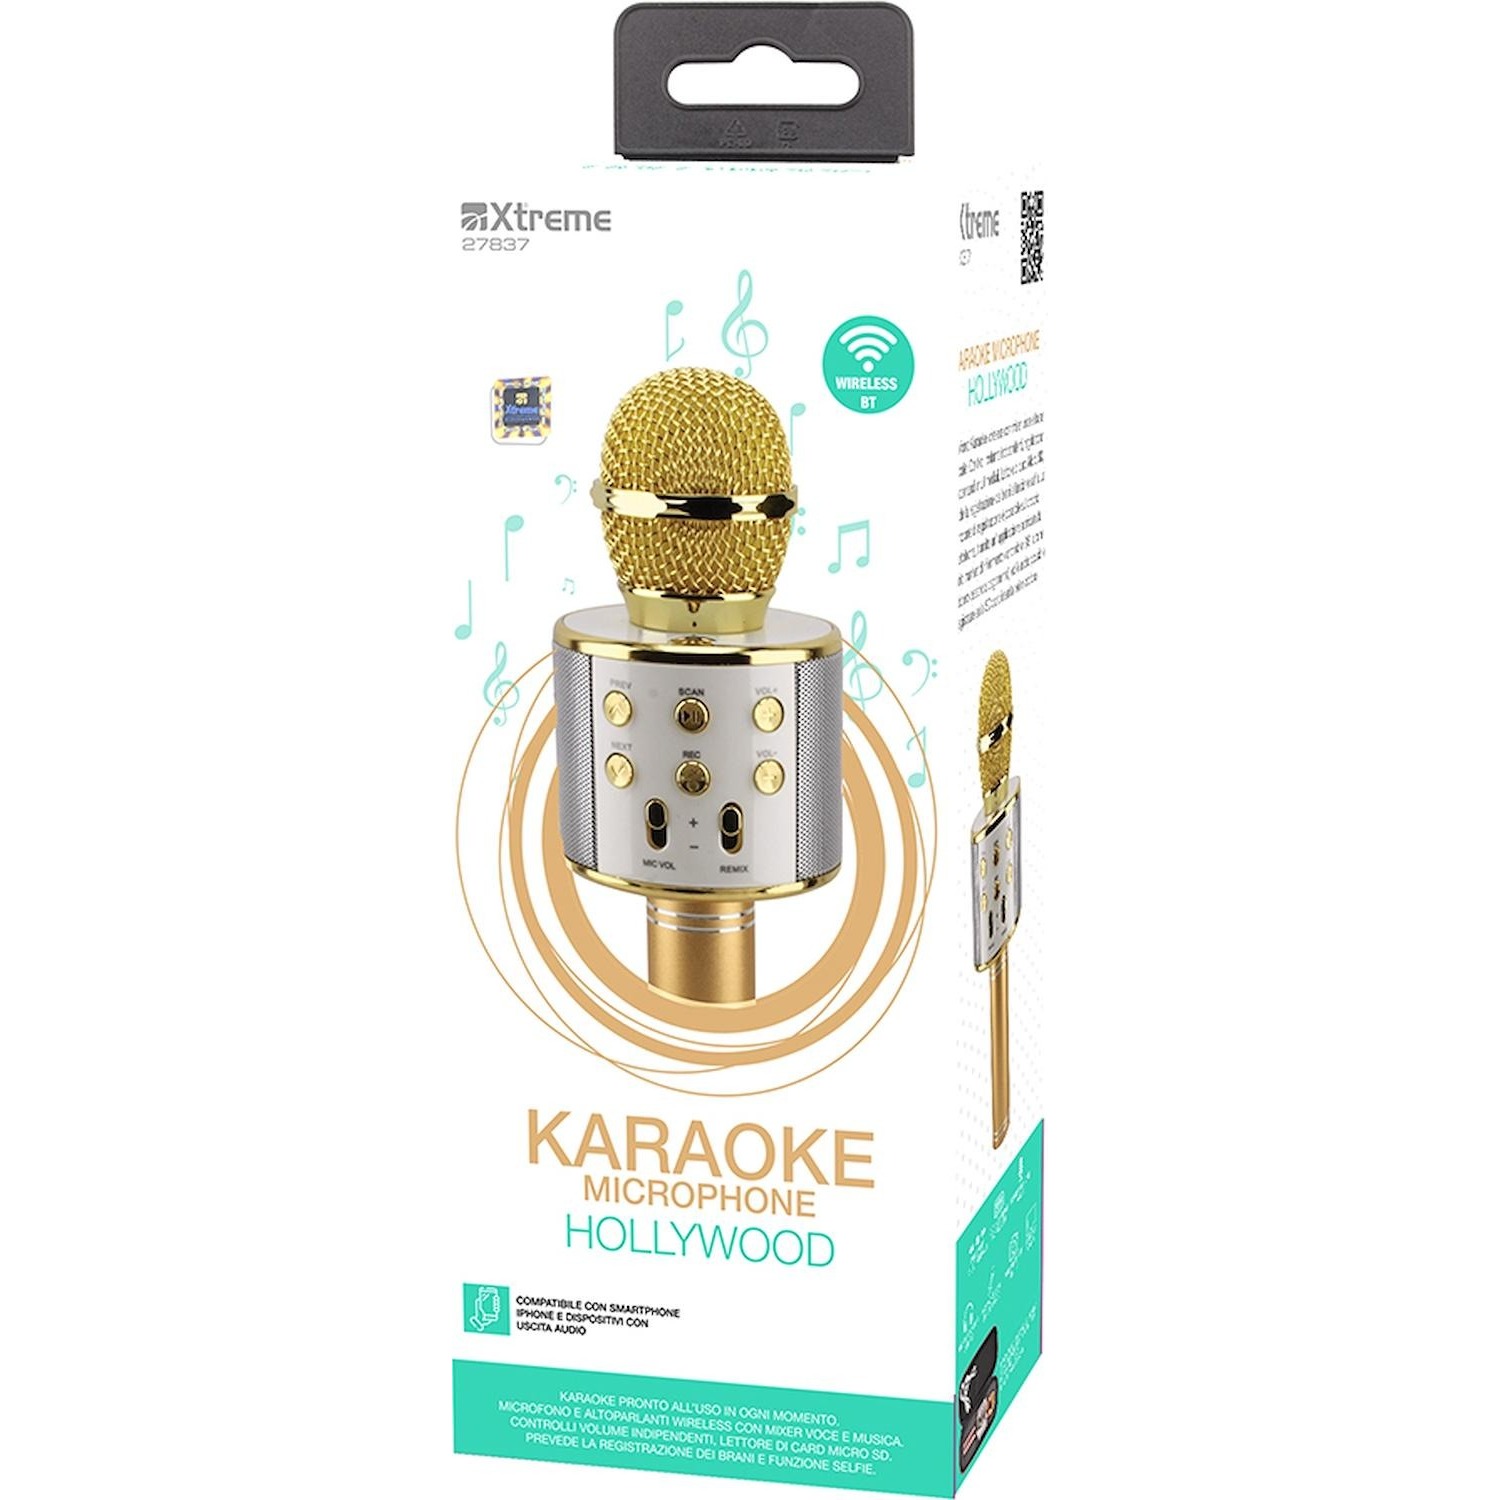 Immagine per Microfono Karaoke XTREME 27837 nero               Hollywood Bluetooth da DIMOStore